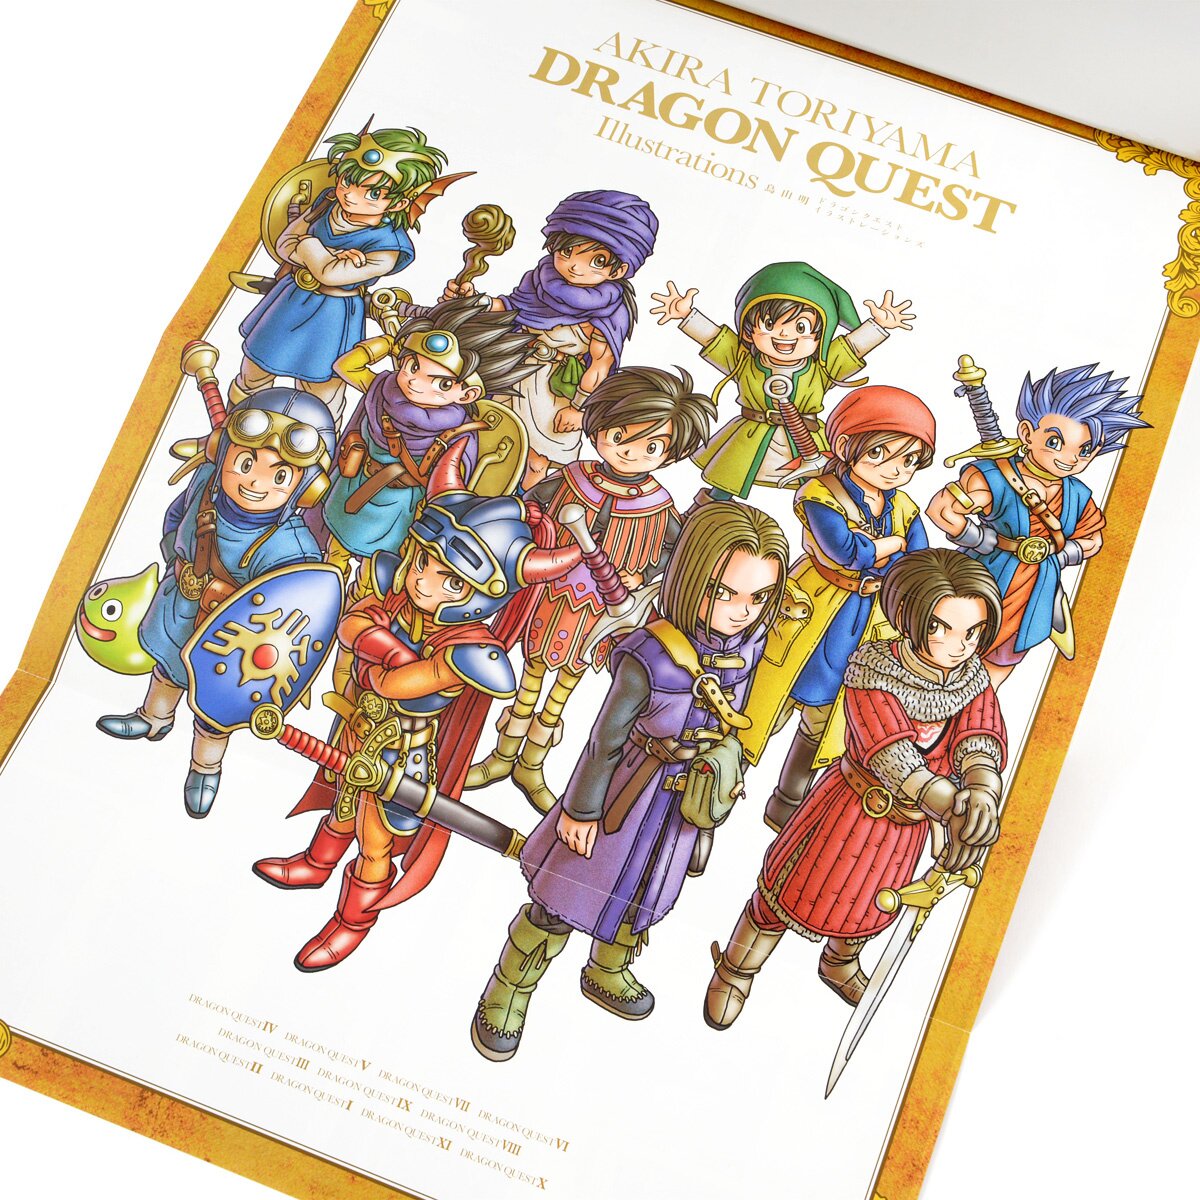 dragon quest illustrations pdf download